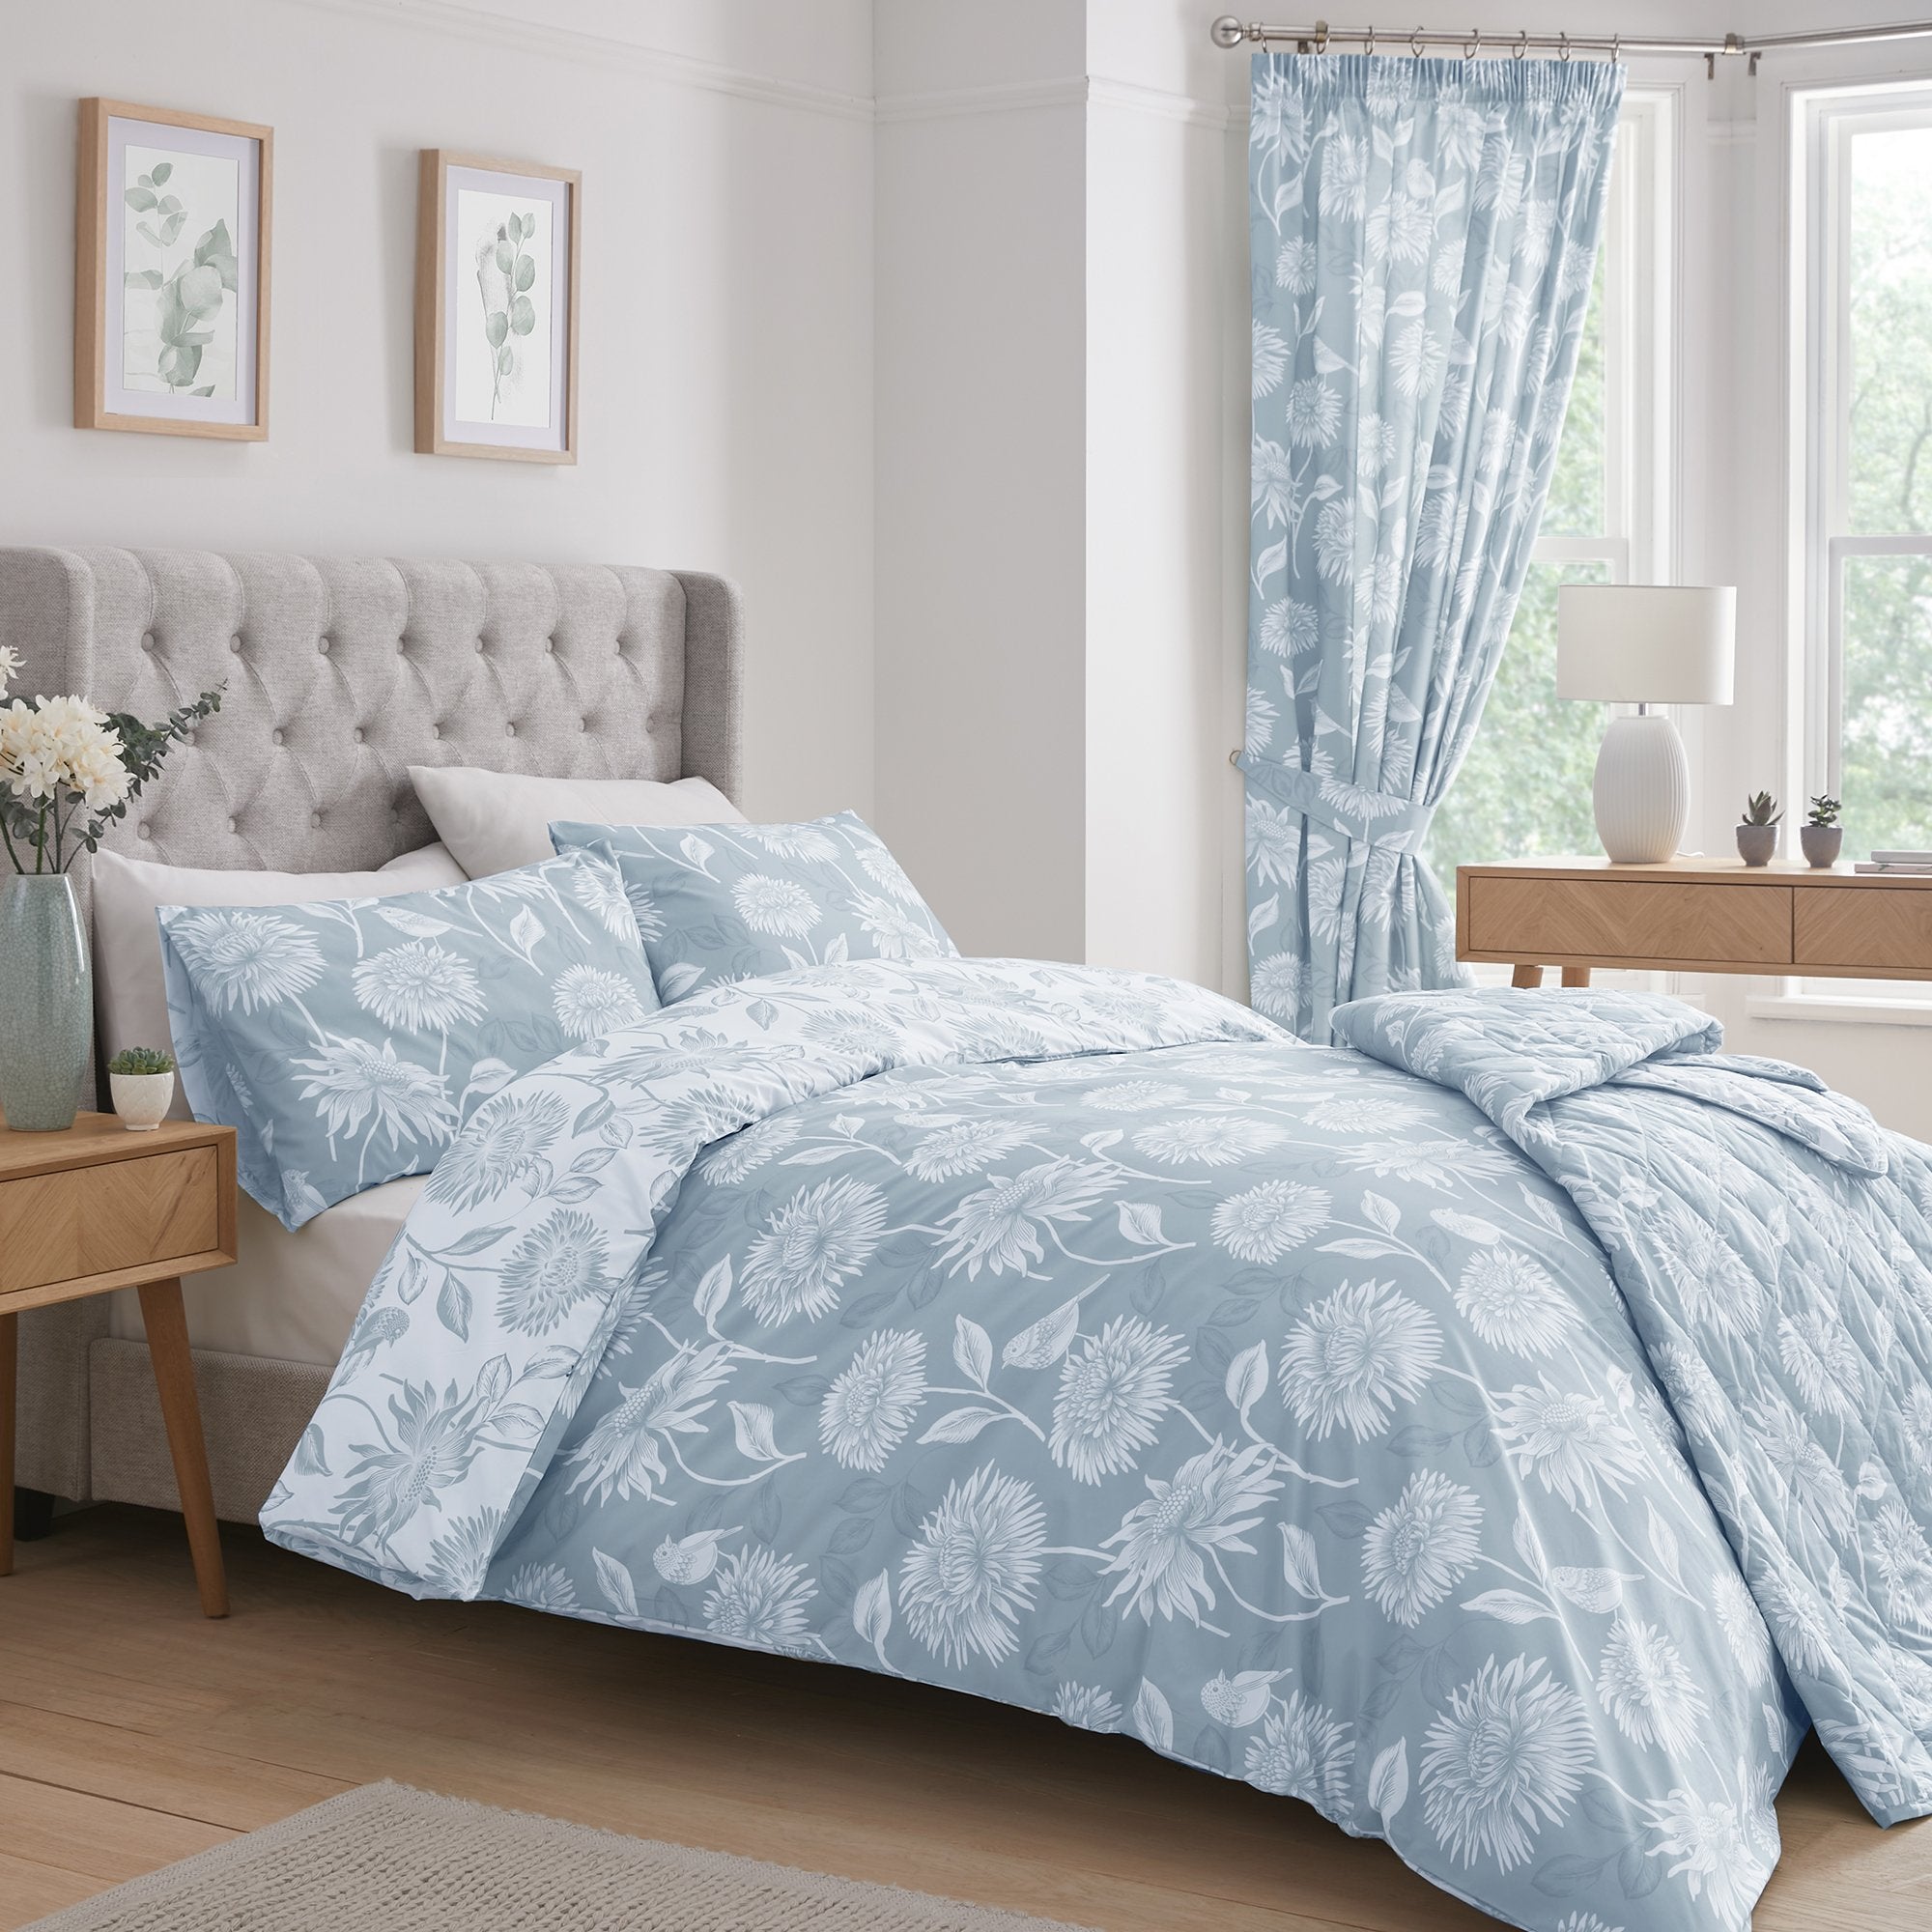 Bedspread Chrysanthemum by Dreams & Drapes Design in Blue